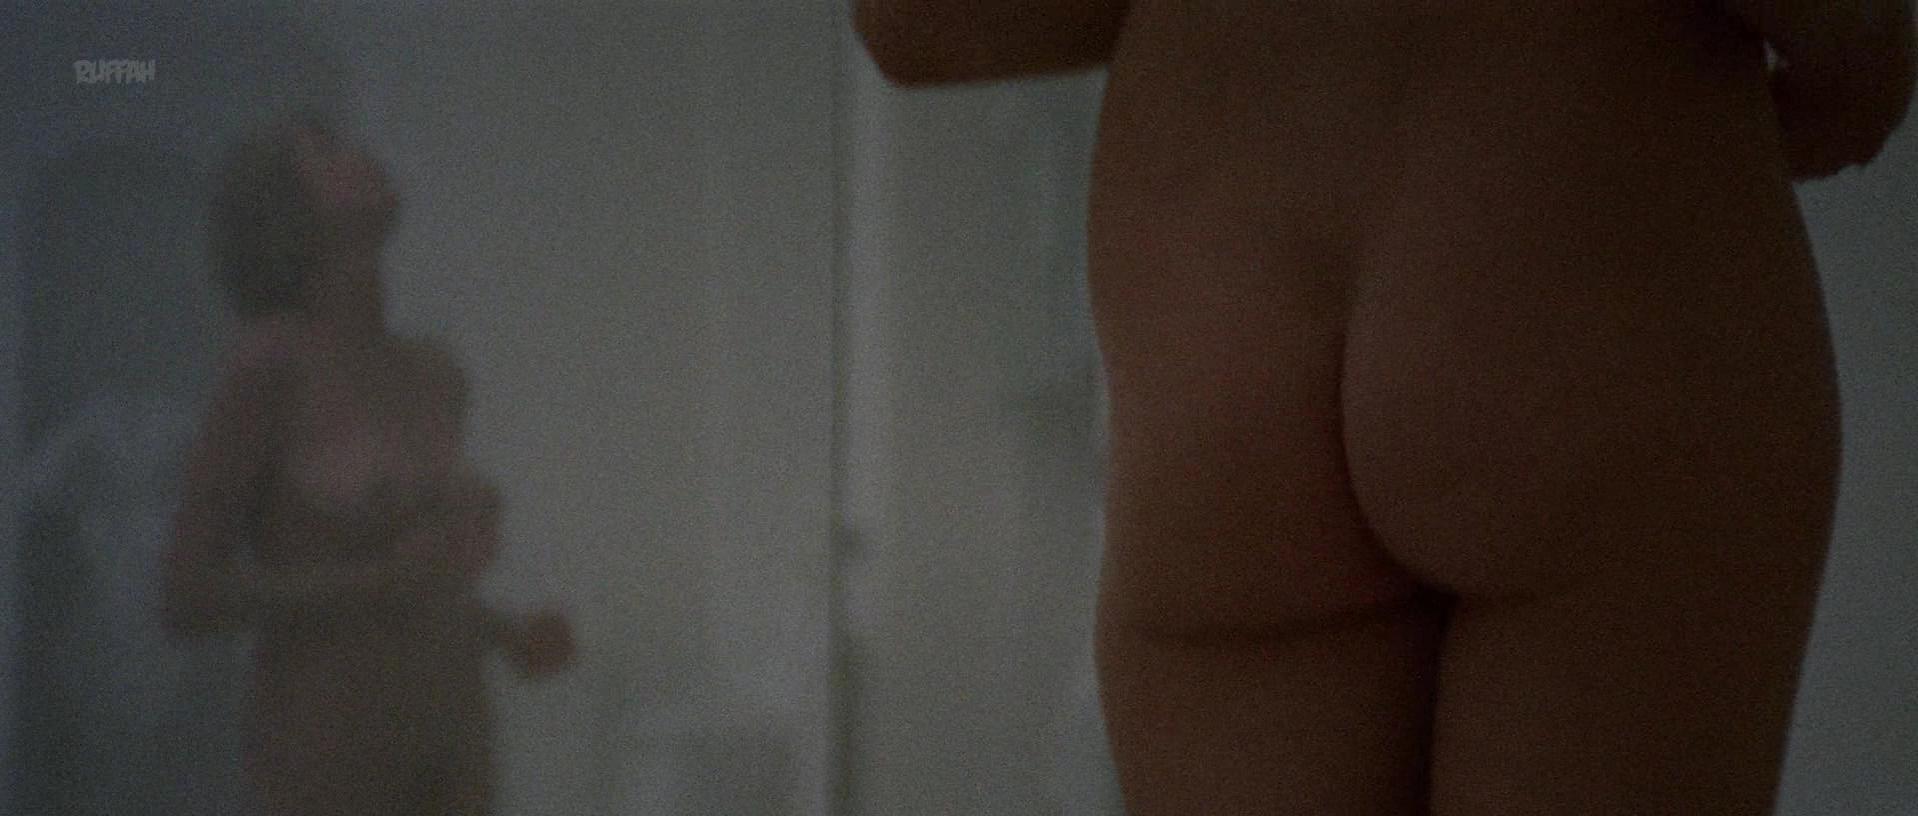 Nude Video Celebs Susannah York Nude Images 1972